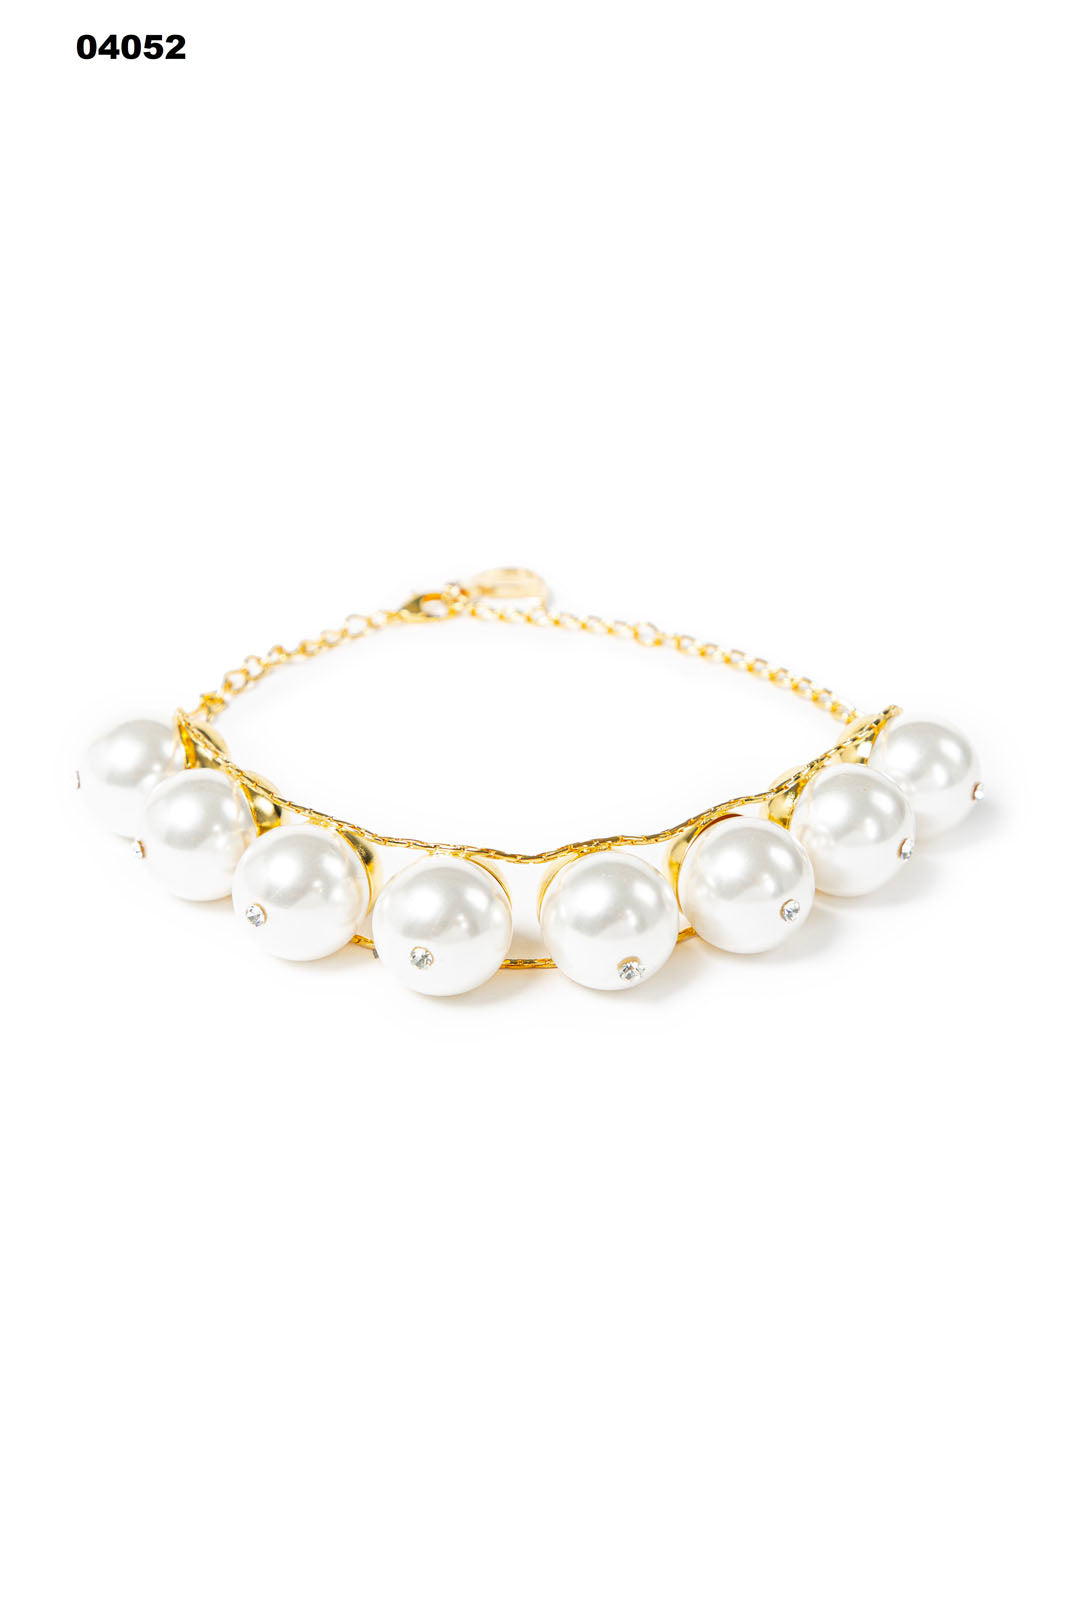 DANIELA DALLAVALLE Perlen Halskette Gold+Silber